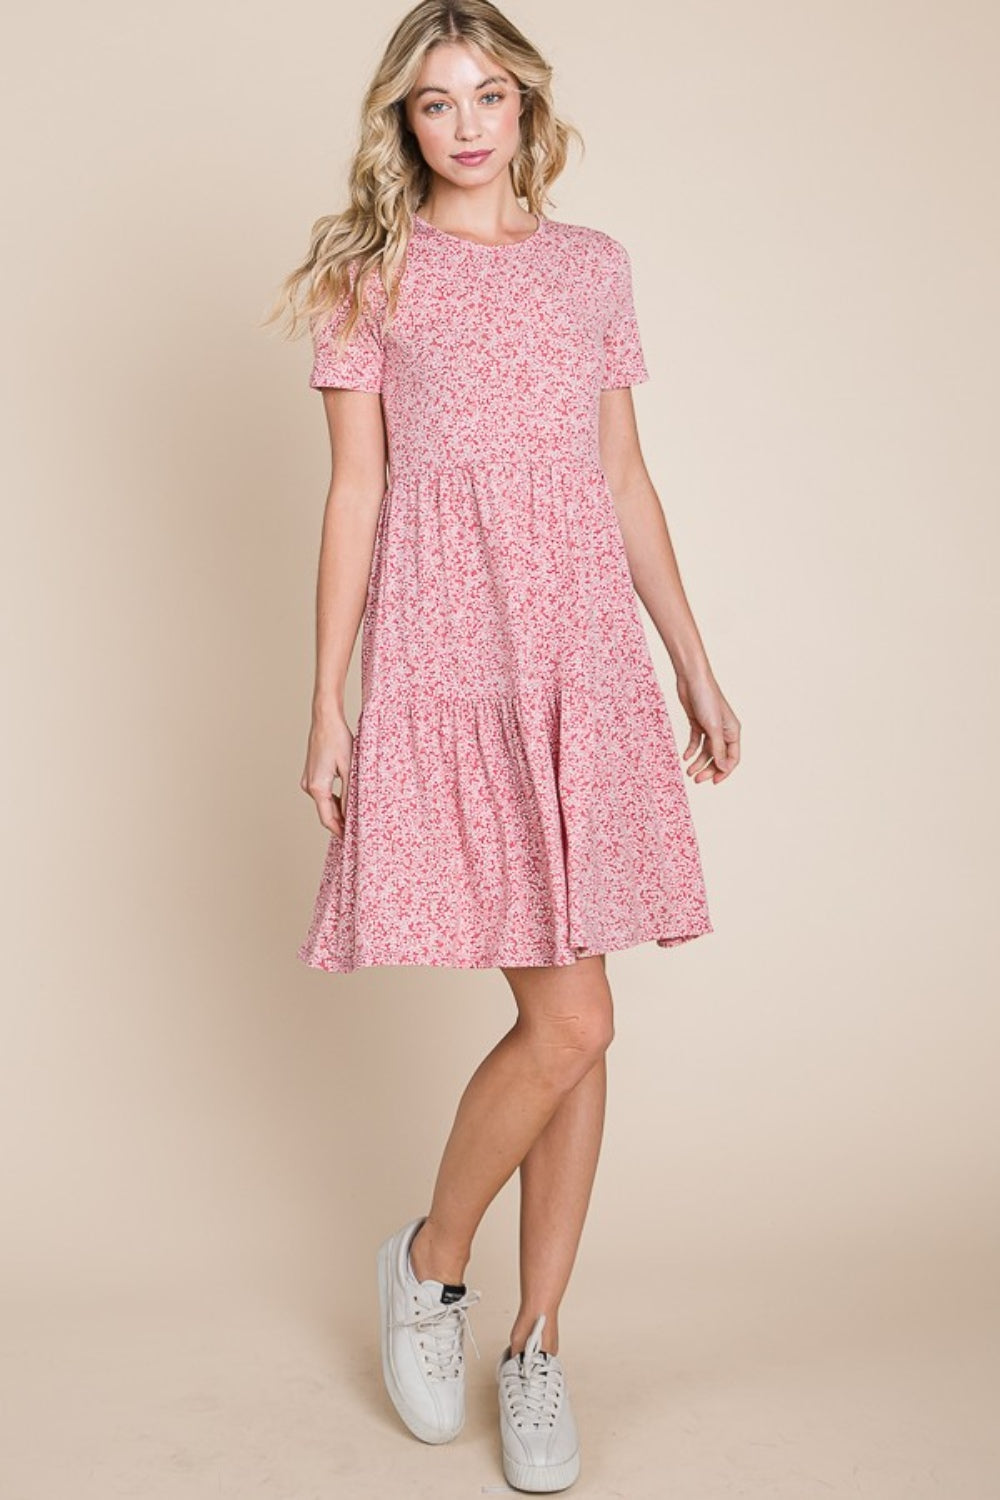 KESLEY Pink Printed Short Sleeve Mini Dress Casual Women's Clothing